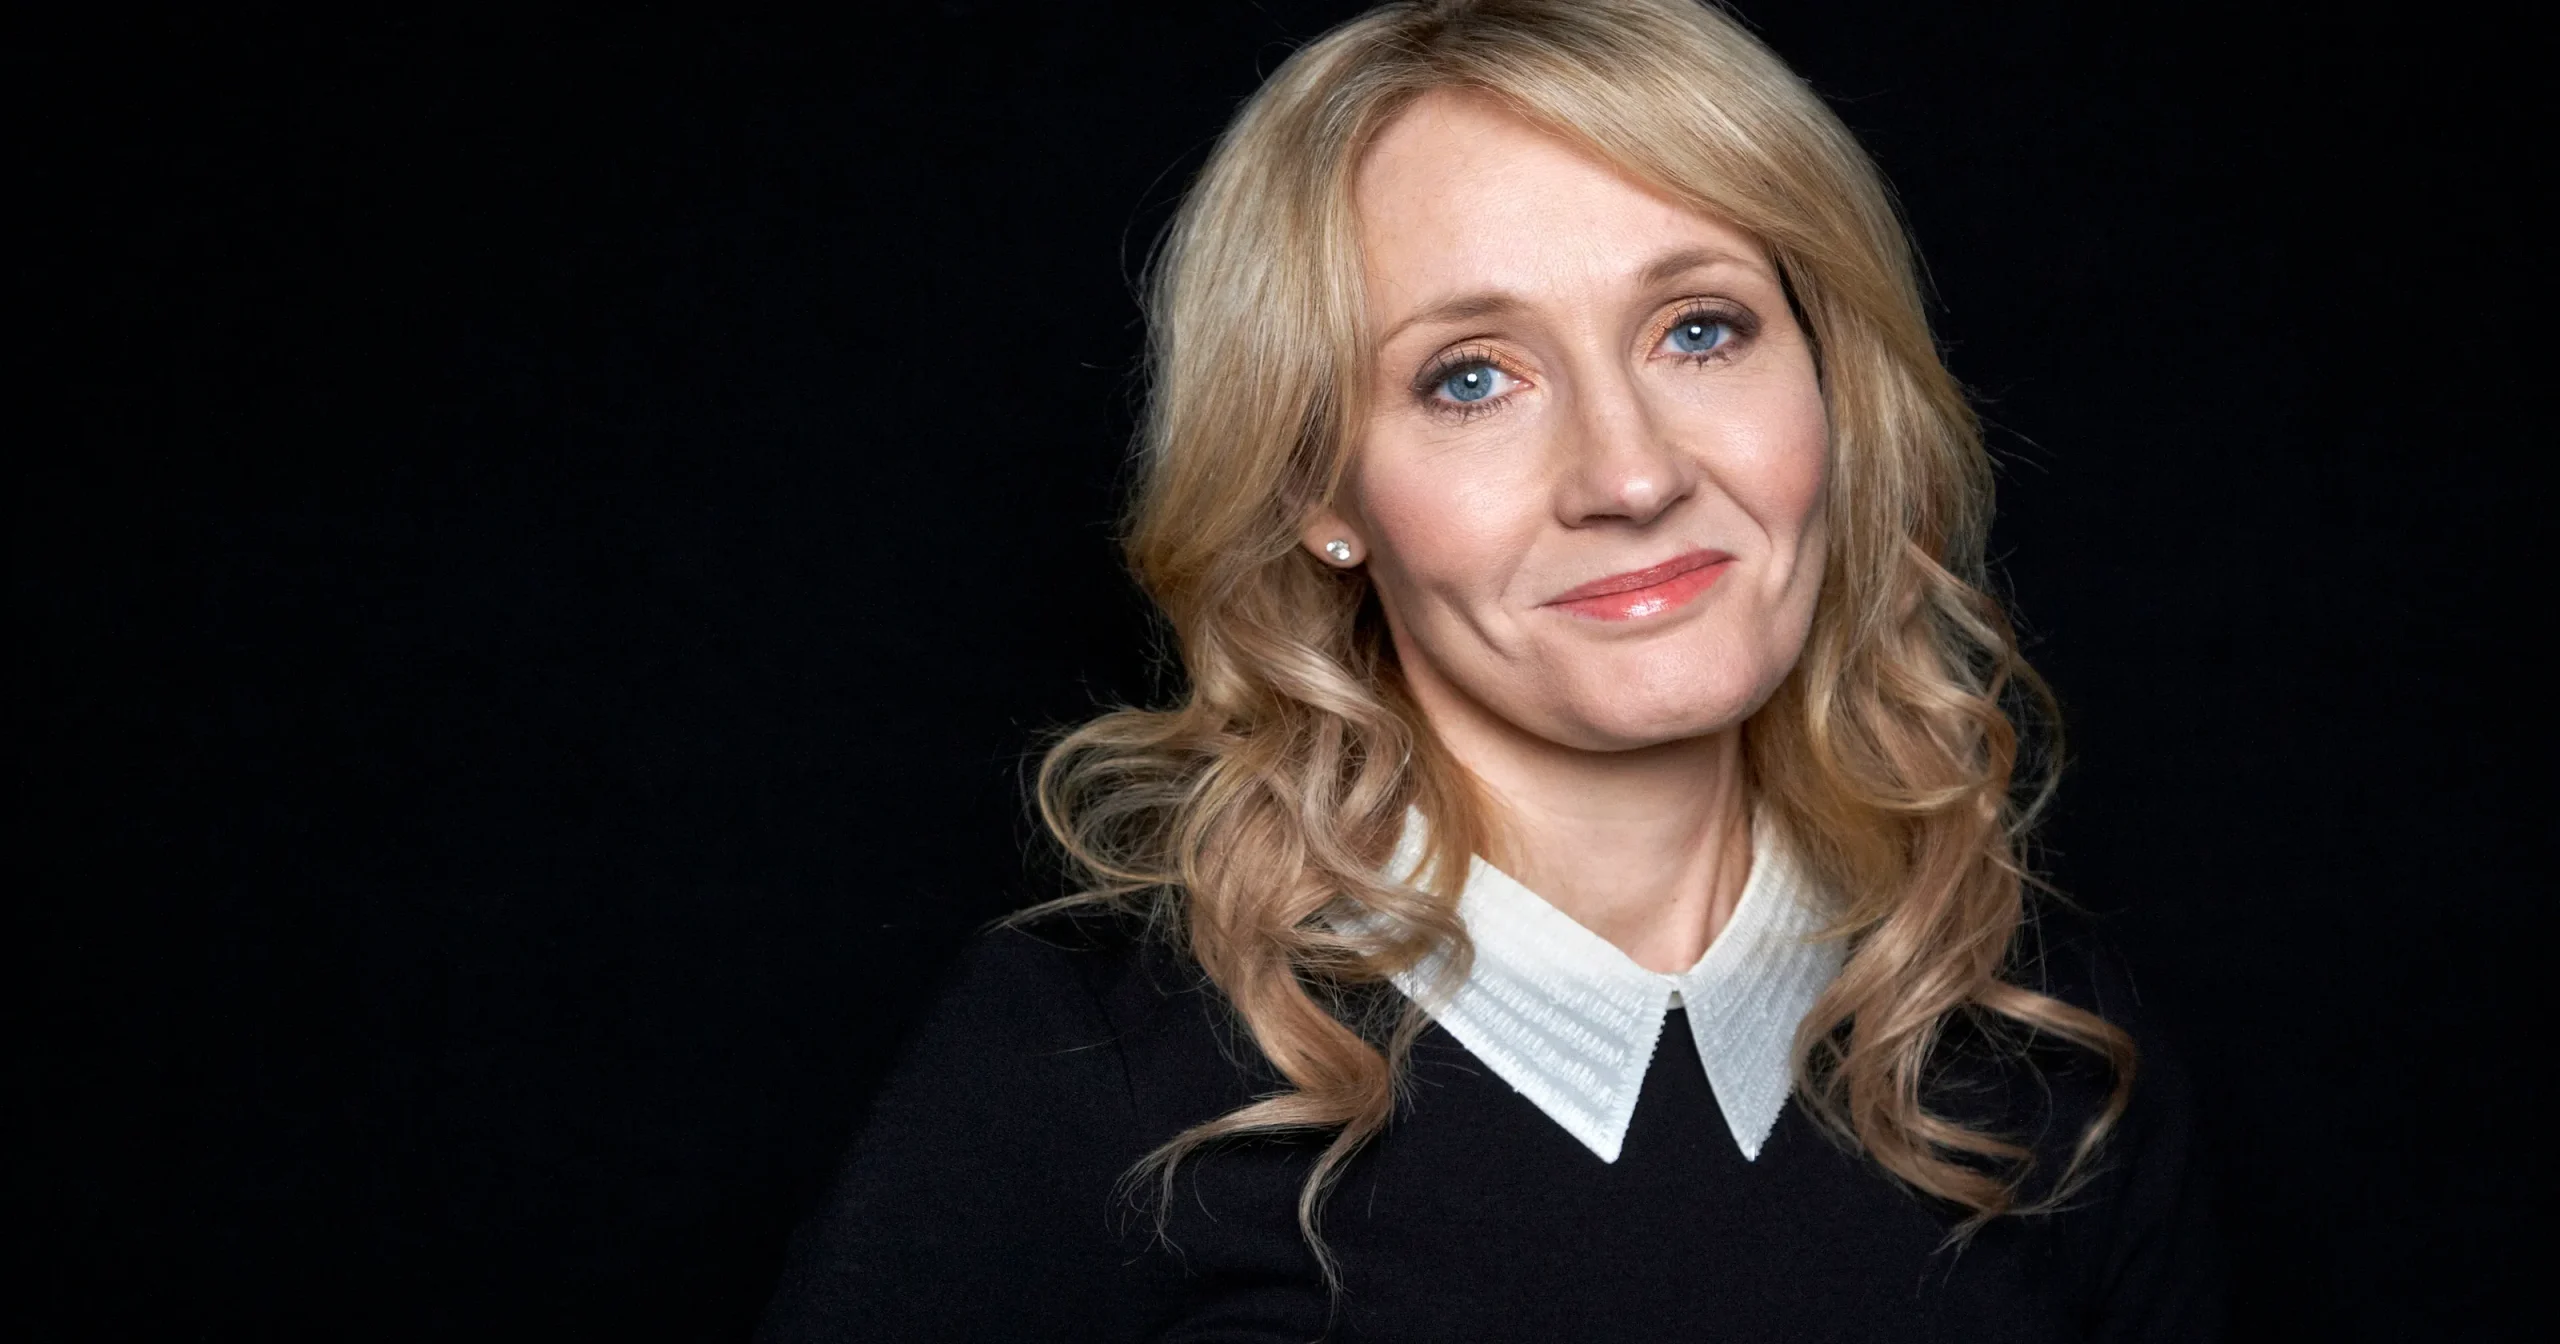 El legado de J.K. Rowling